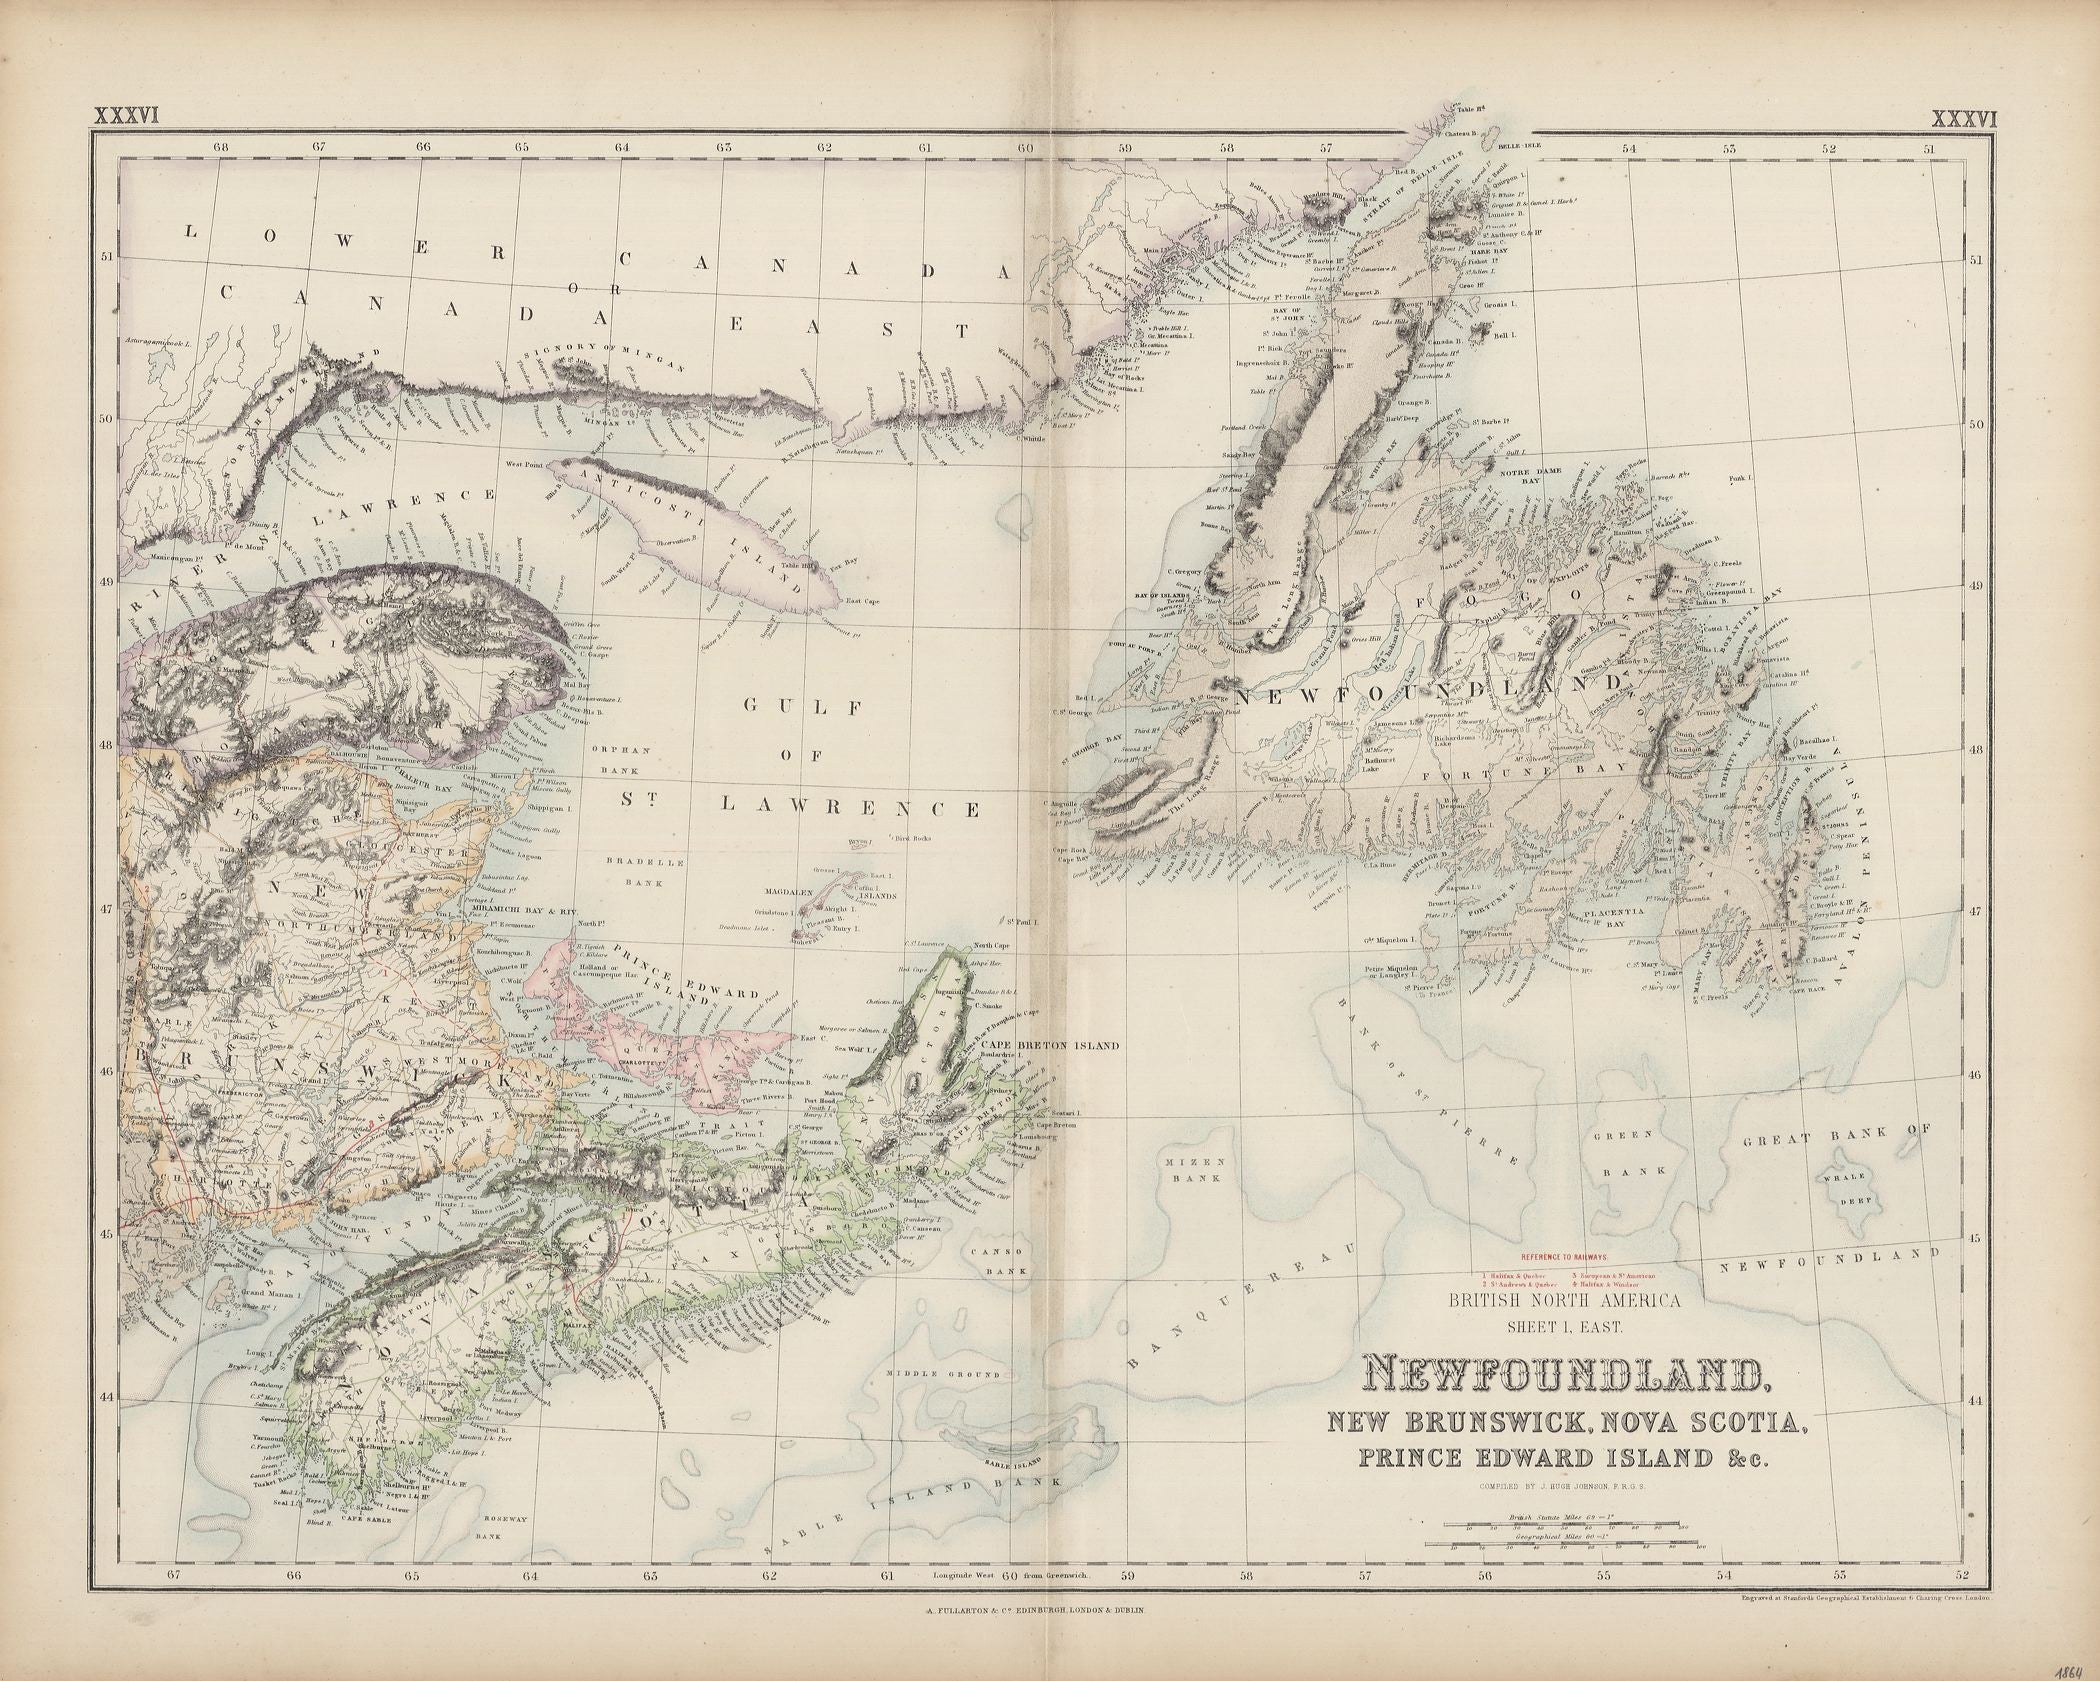 Fullarton, Archibald: British North America sheet I. East. Newfoundland, New Brunswick, Nova Scotia, Prince Edward Island & c. 1864